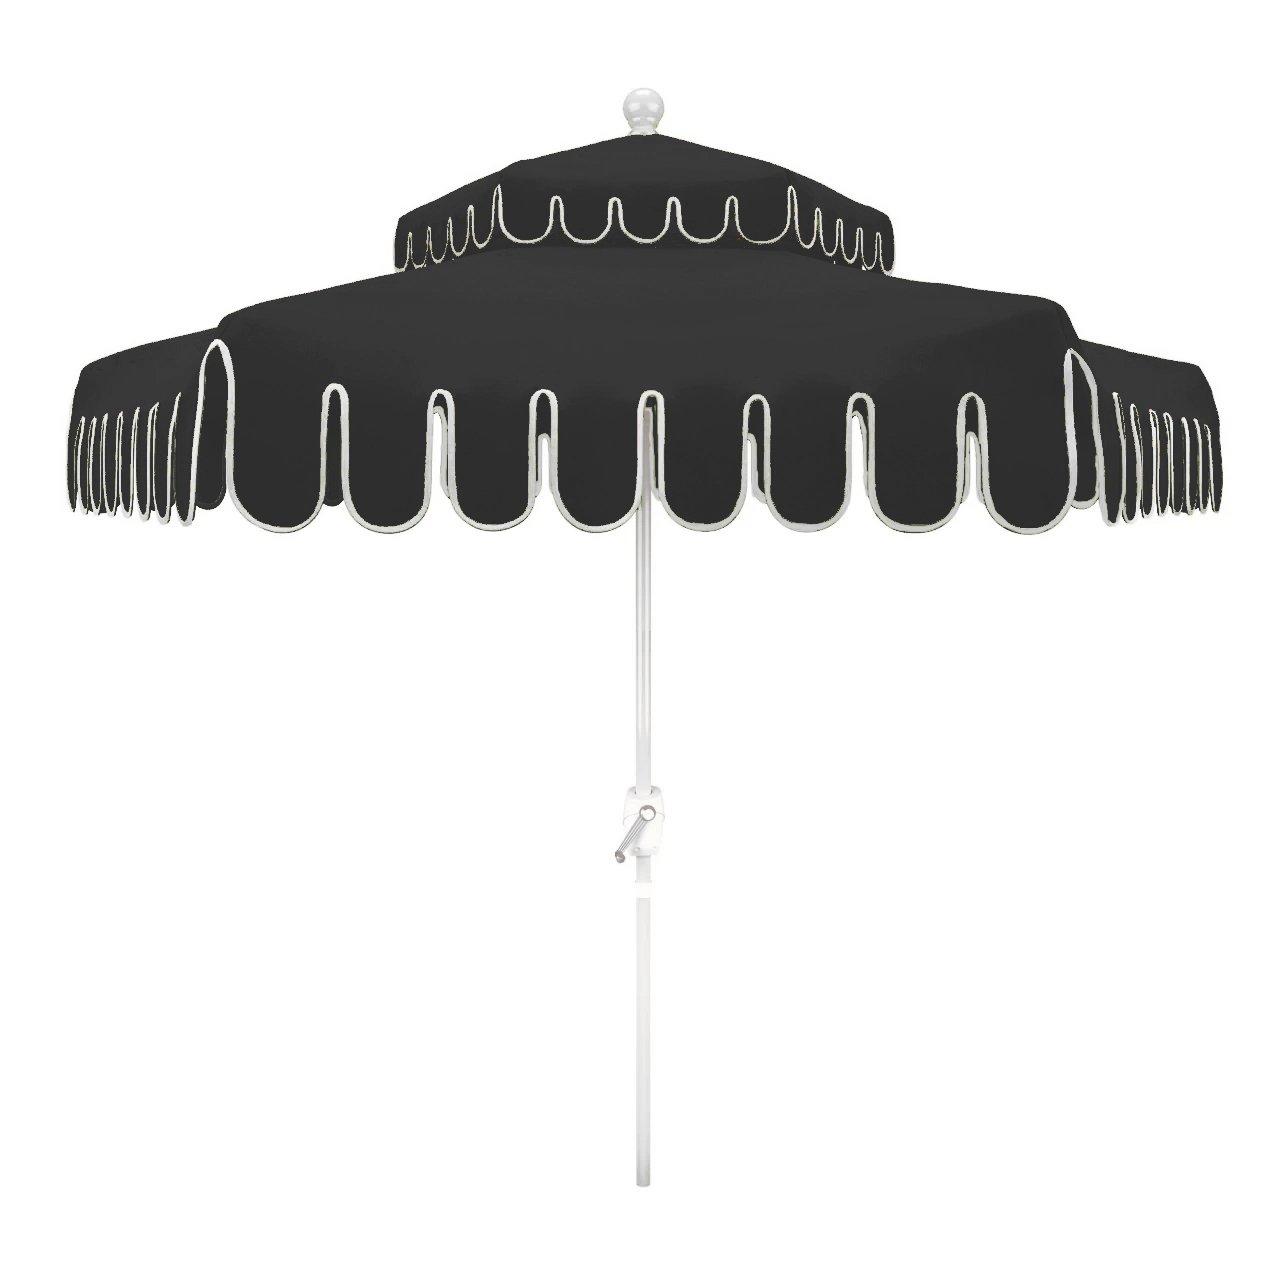 Terrace Dreamhouse 9 Umbrella